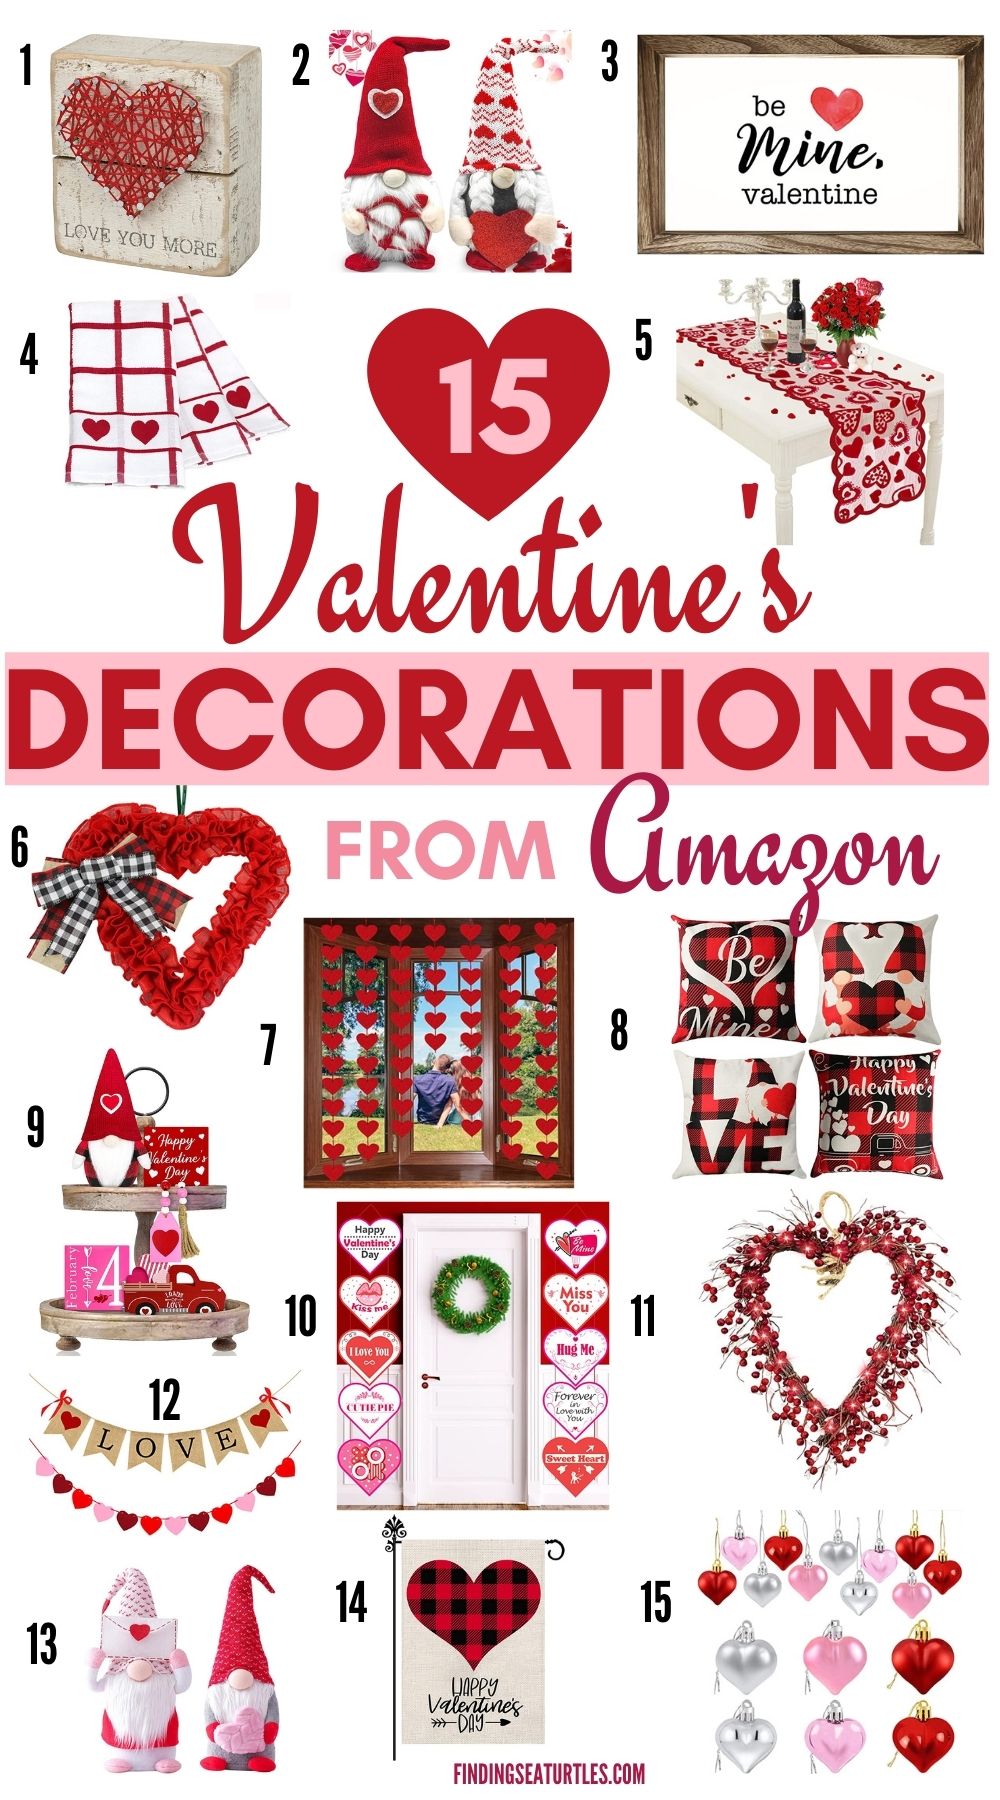 15 VALENTINE's Decorations from Amazon #ValentinesDay #ValentinesDecor #HomeDecor #ValentineDecorIdeas